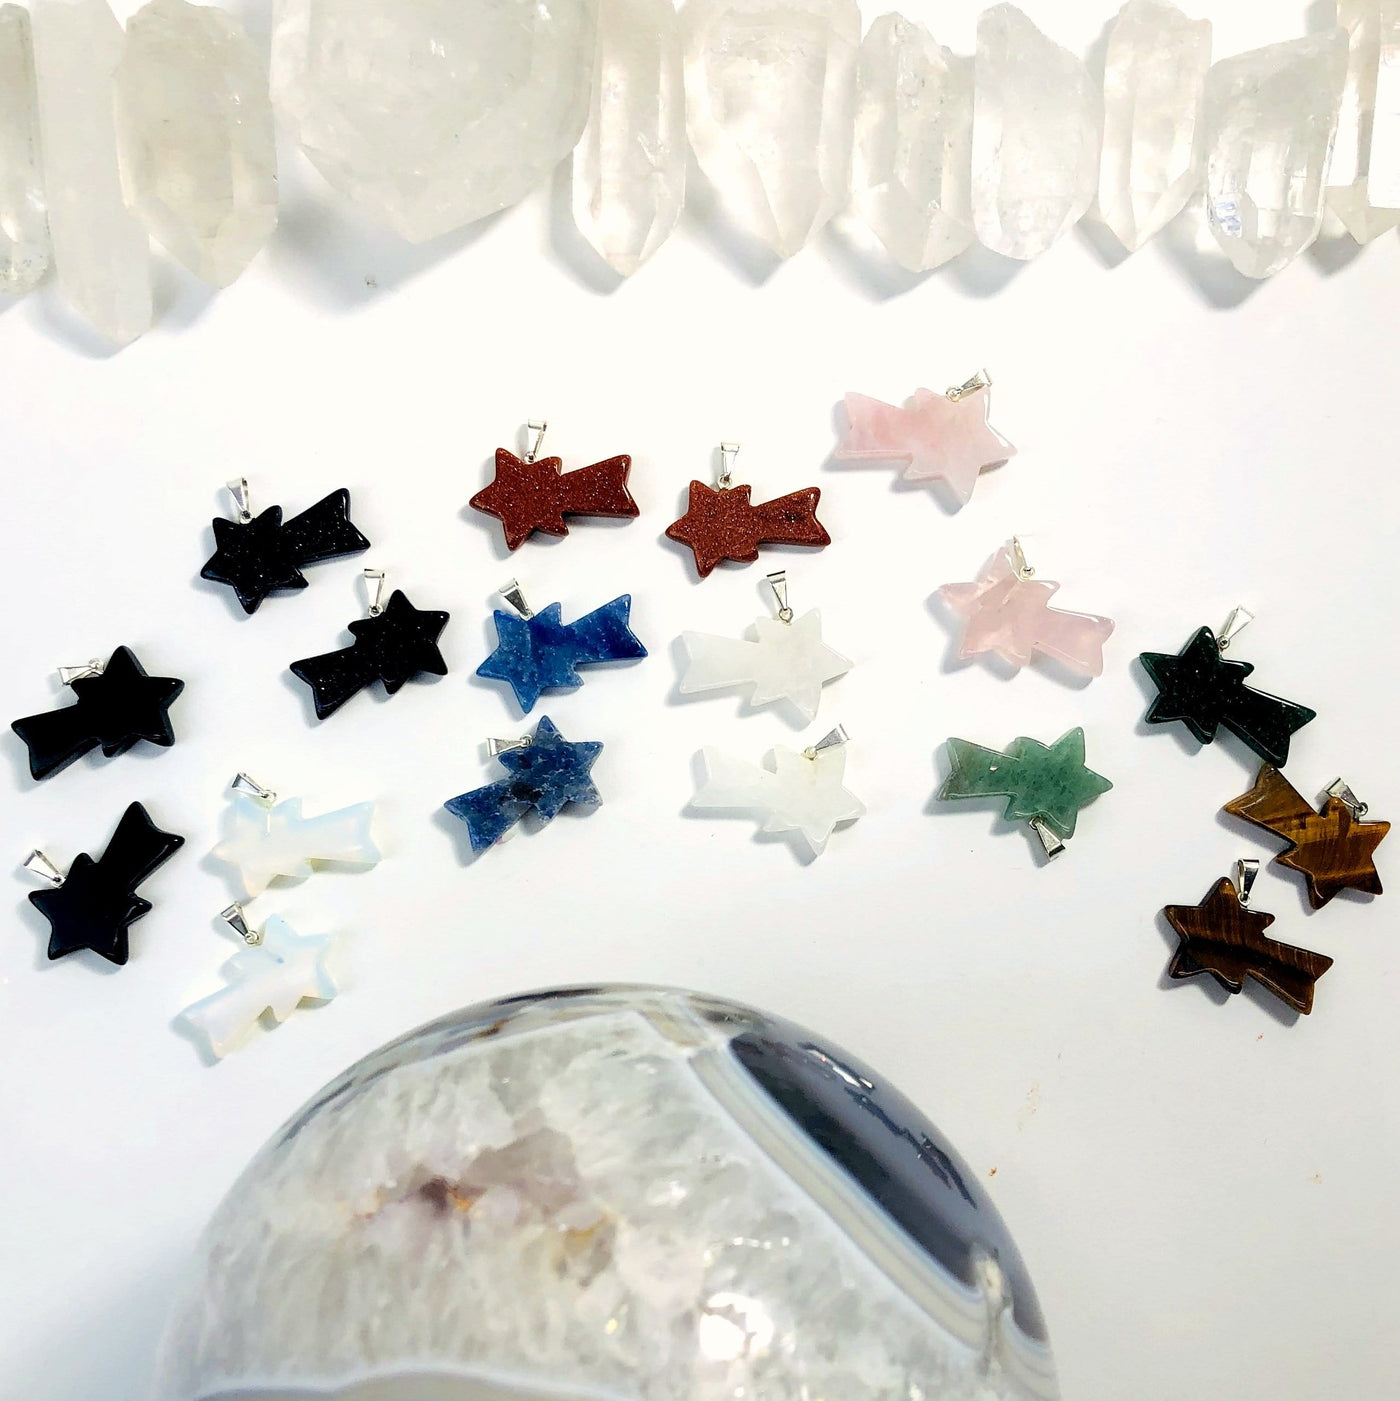 many shooting star stone pendants on display